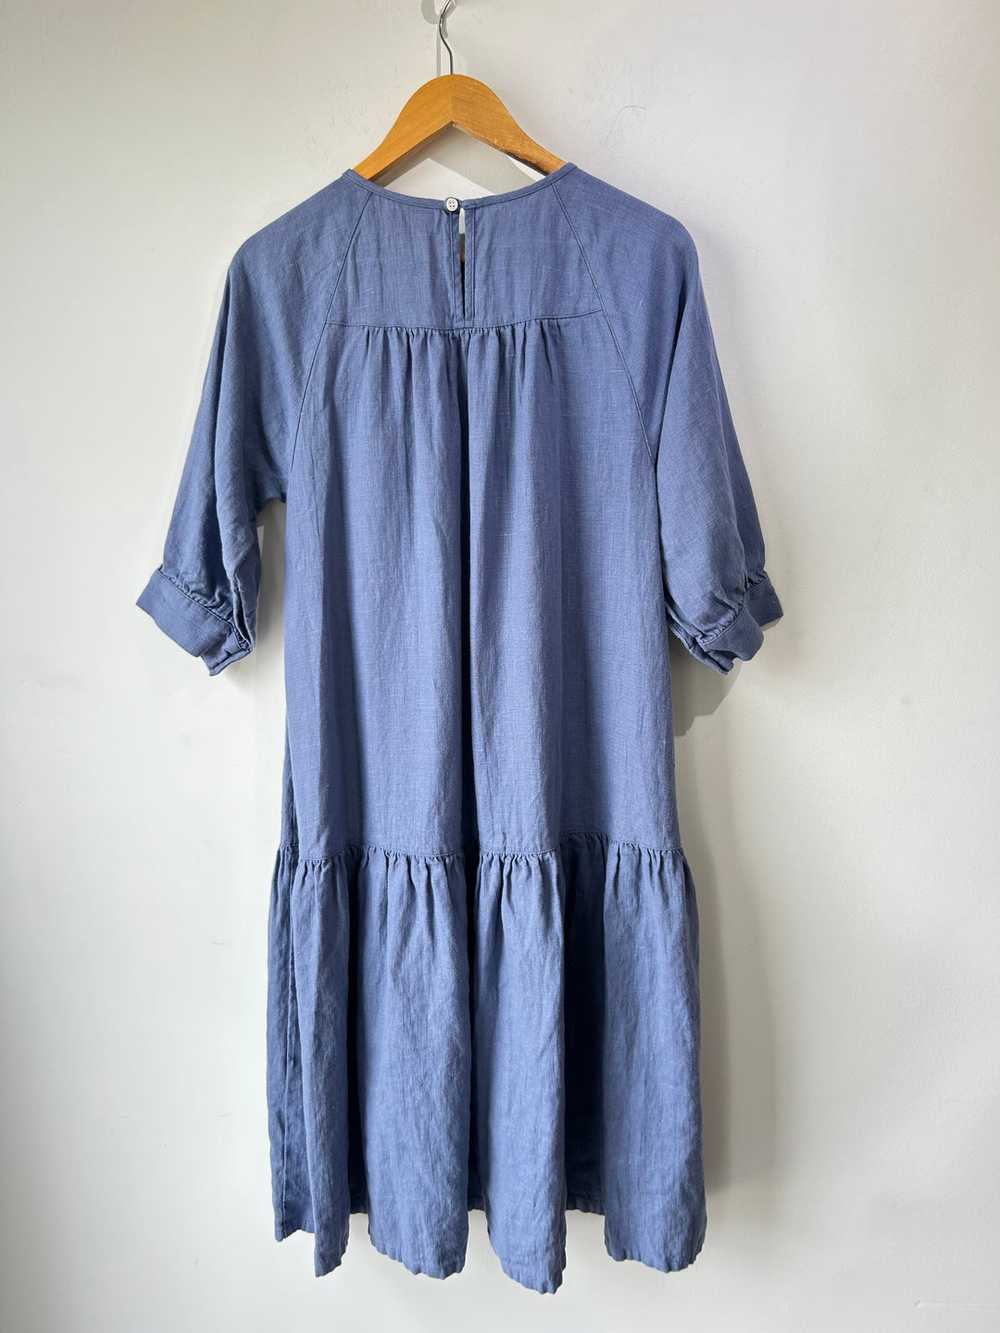 Beaton Cornflower Blue Linen Dress - image 5